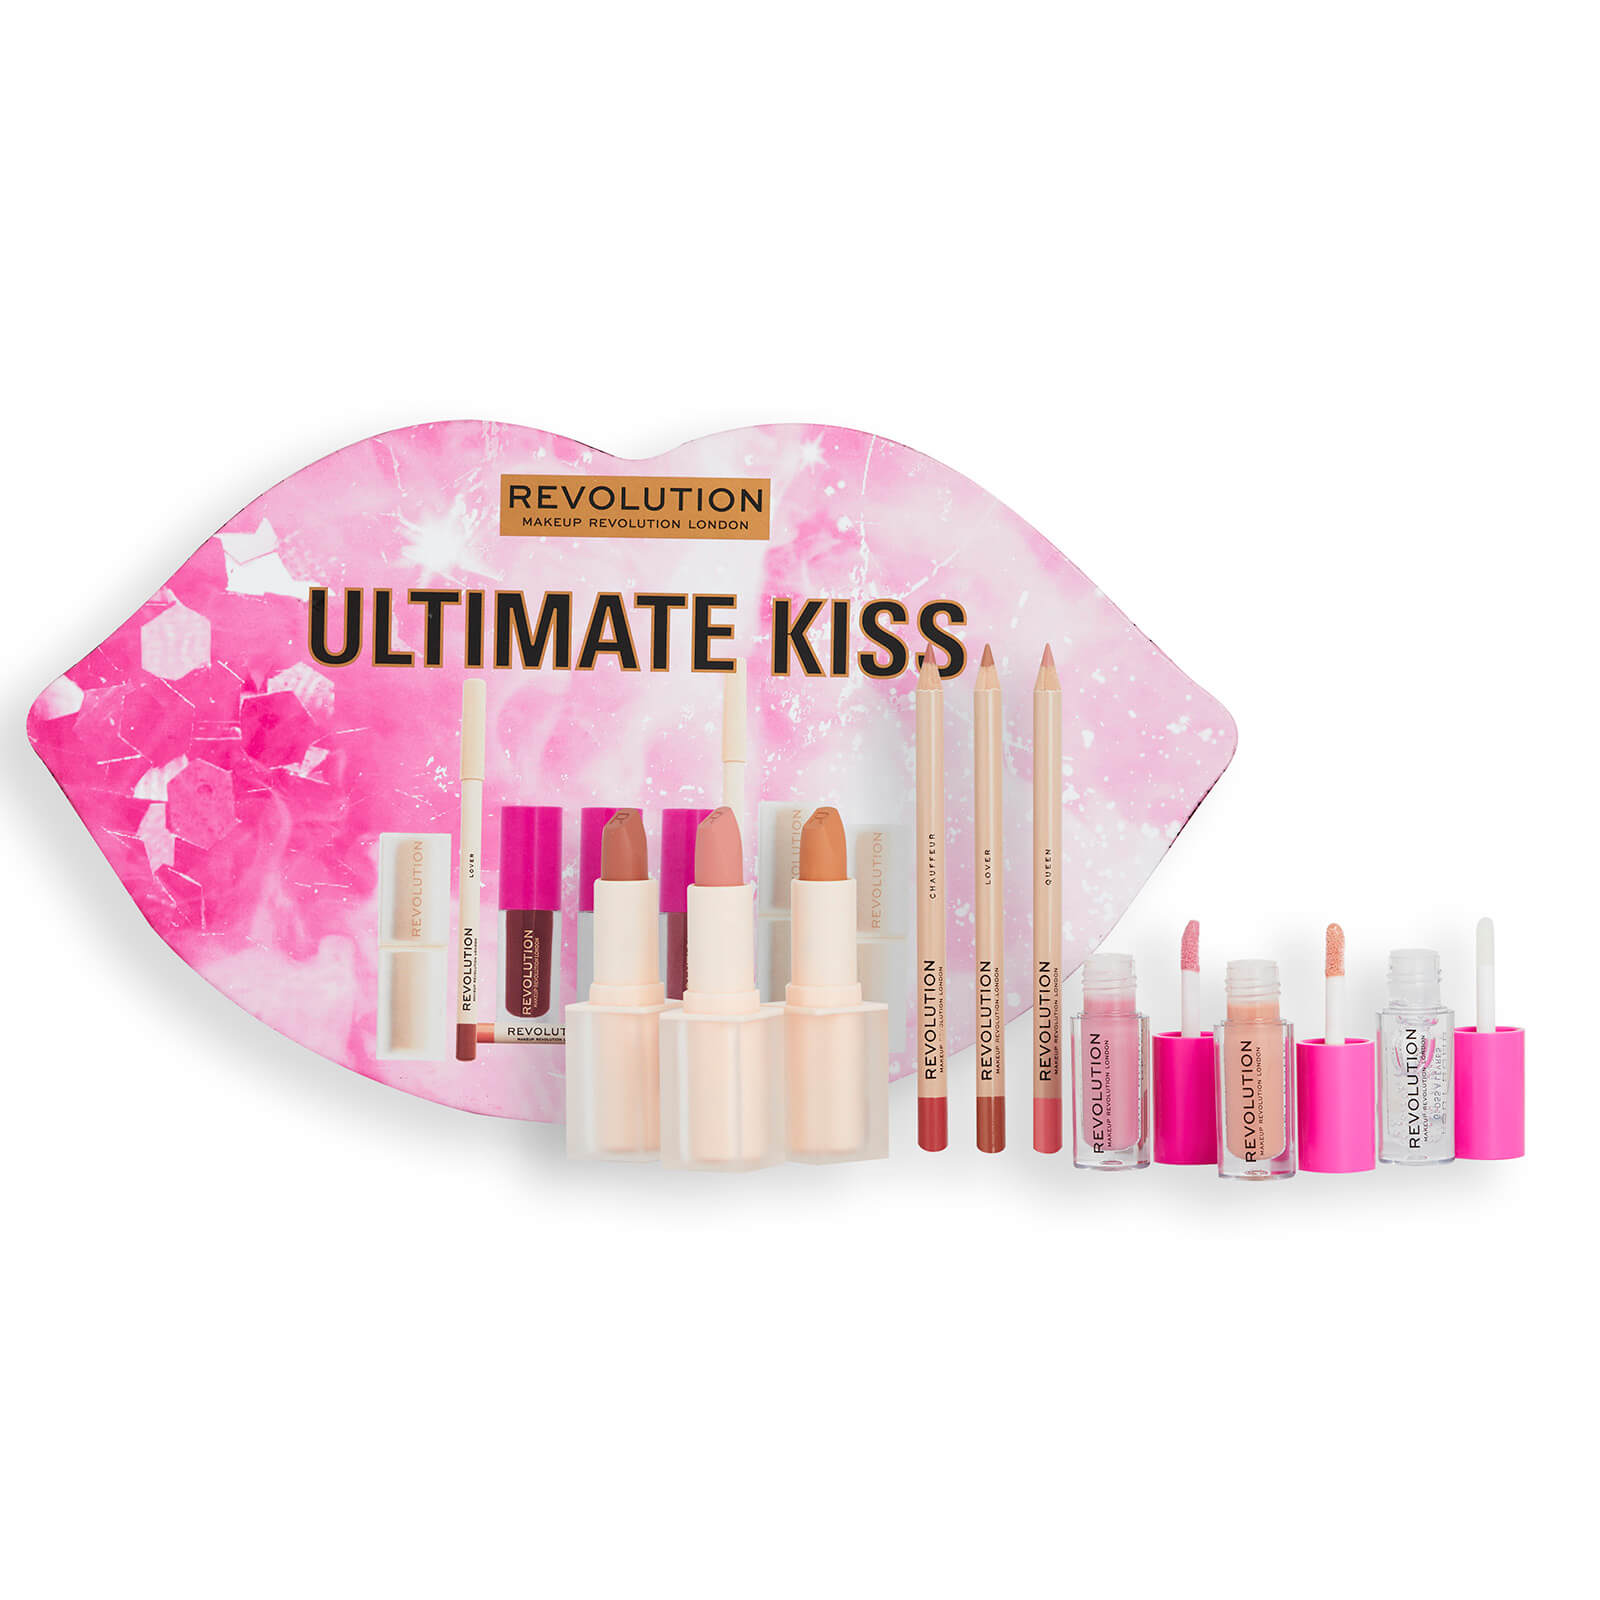 Revolution Ultimate Kiss Gift Set In Multi